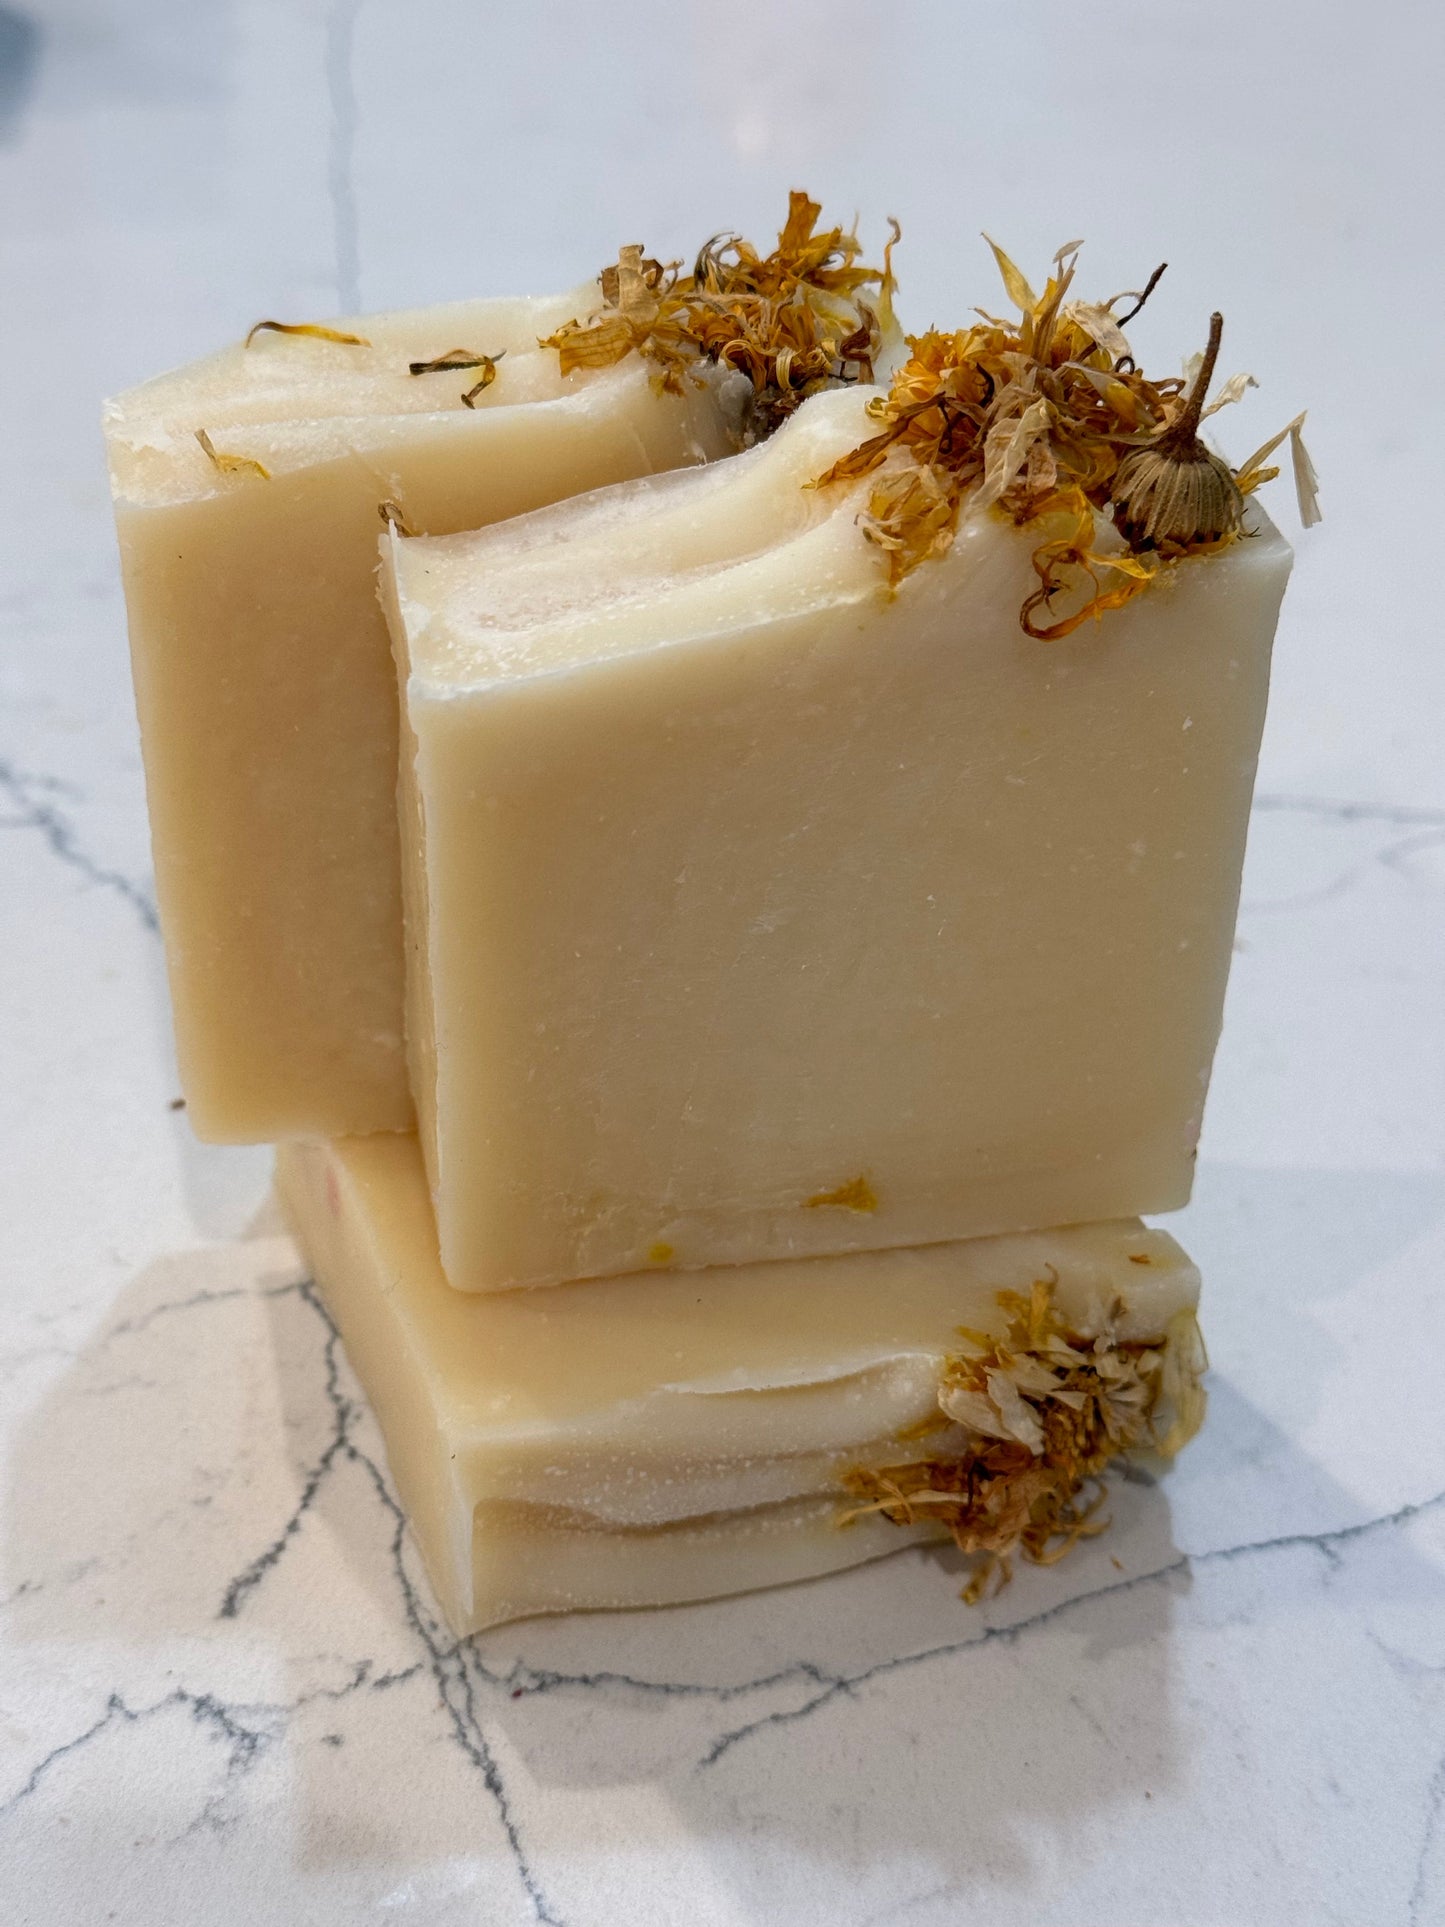 Botanical Collection Gift Set of Goats Milk Luxury Handmade Soap with Botanicals